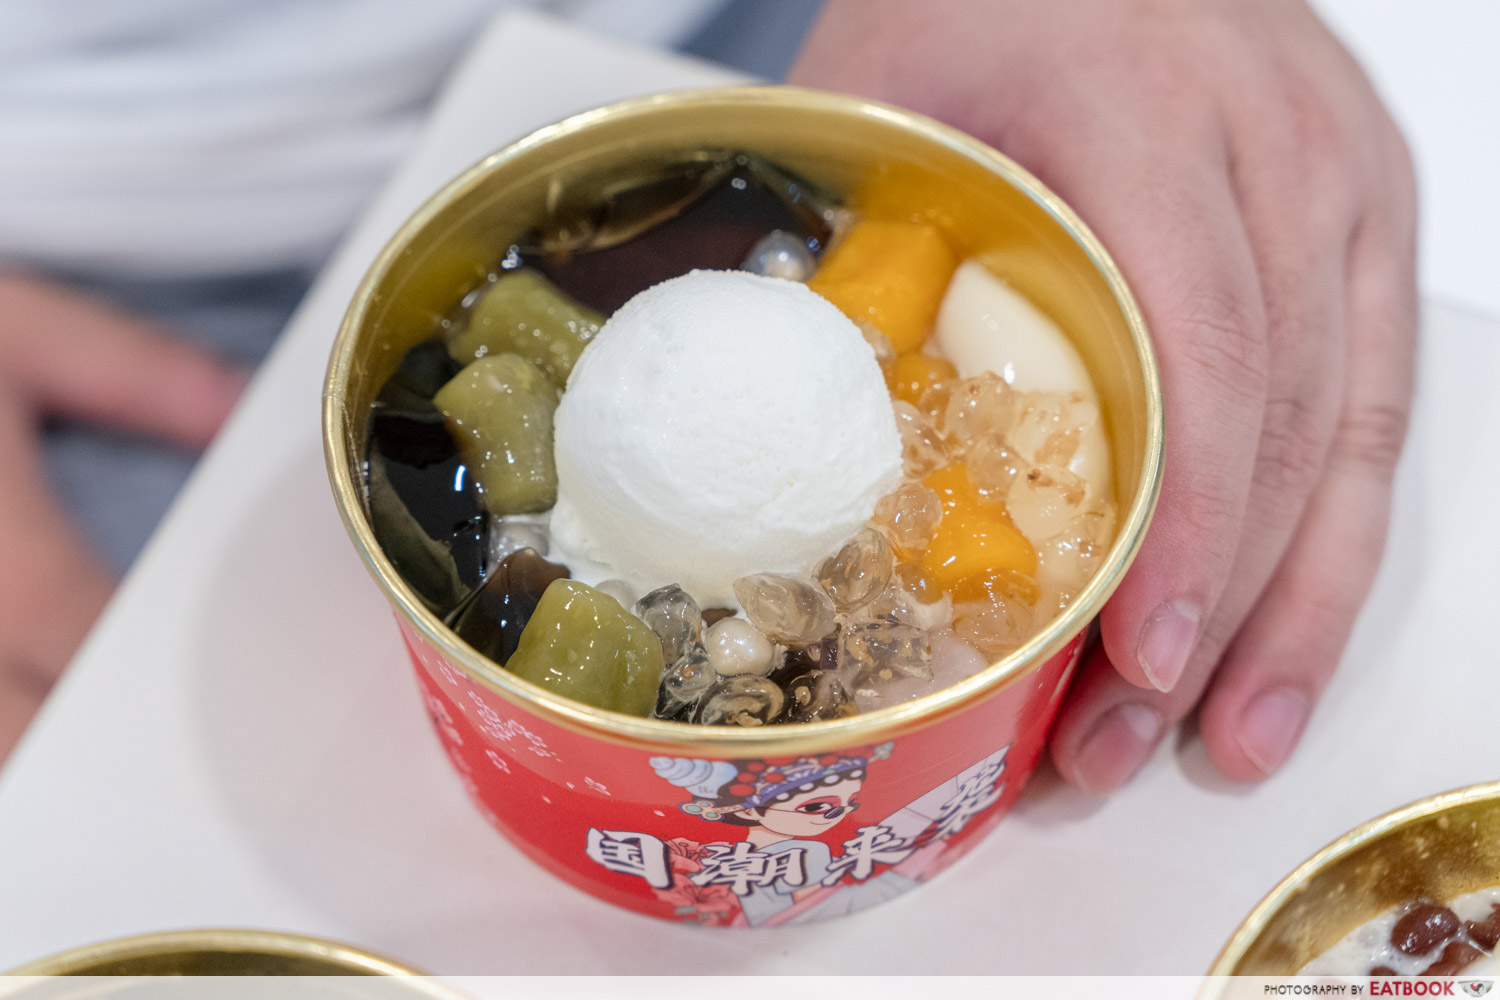 duke-dessert-beancurd-jelly-with-ice-cream-and-tapioca-establishment